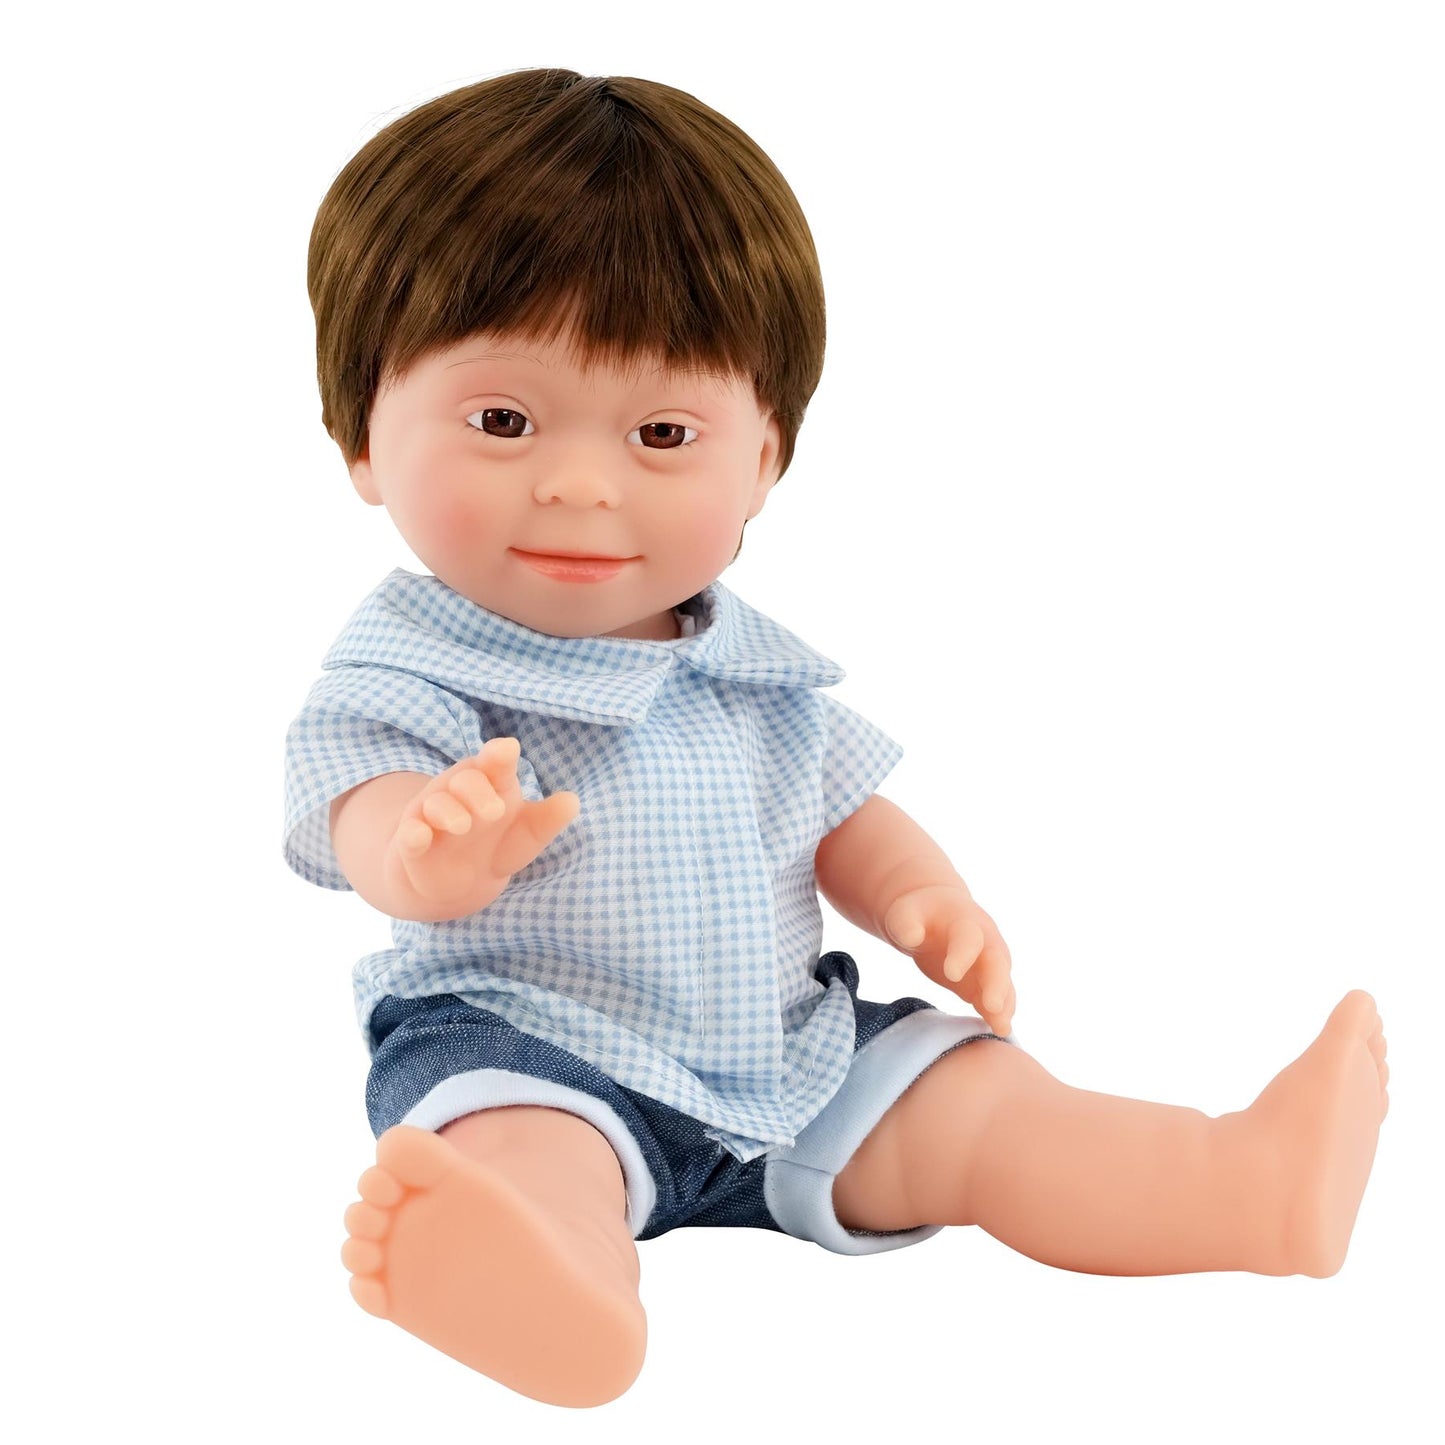 Baby Boy Dolls with Down Syndrome by BiBi Doll - UKBuyZone